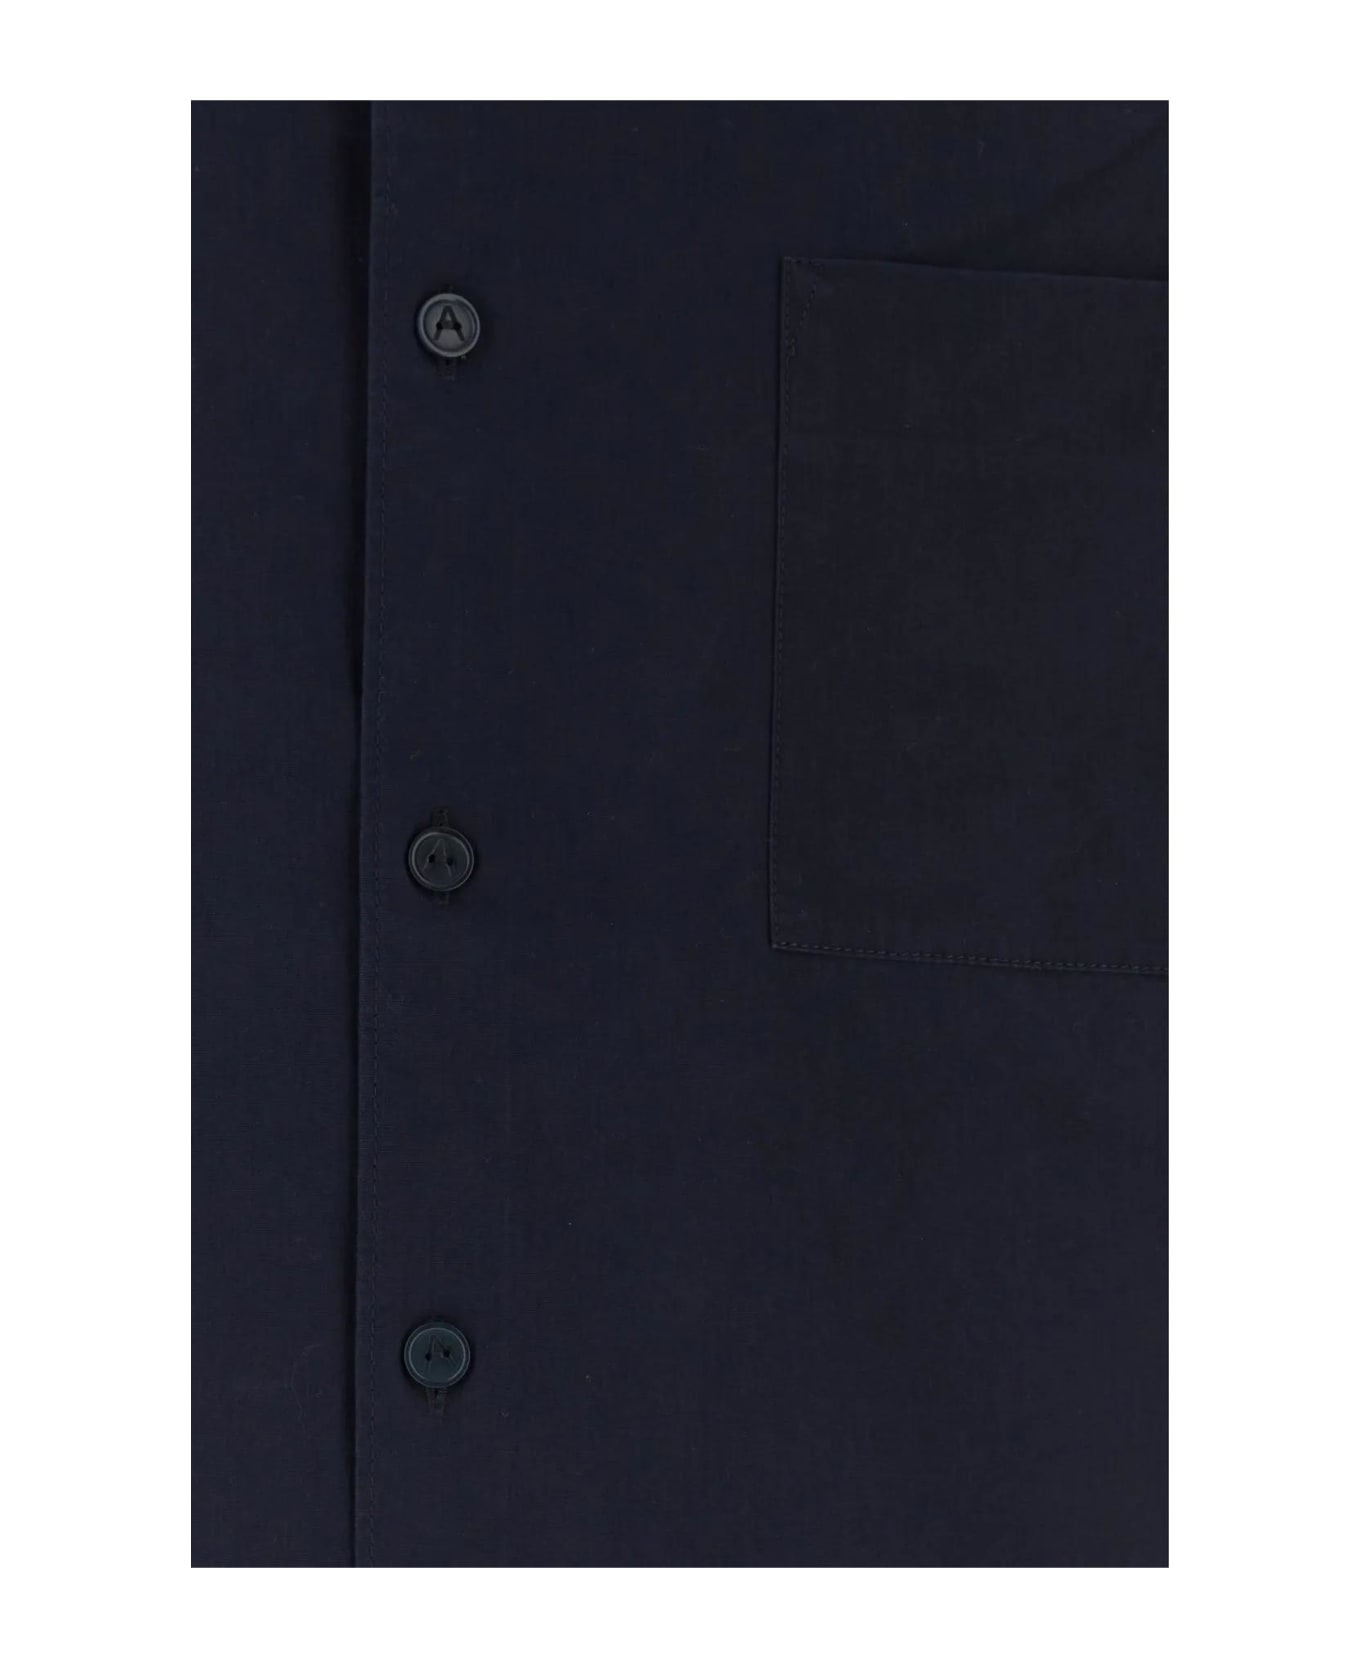 A.P.C. Dark Blue Poplin Ross Shirt - Iak Dark Navy